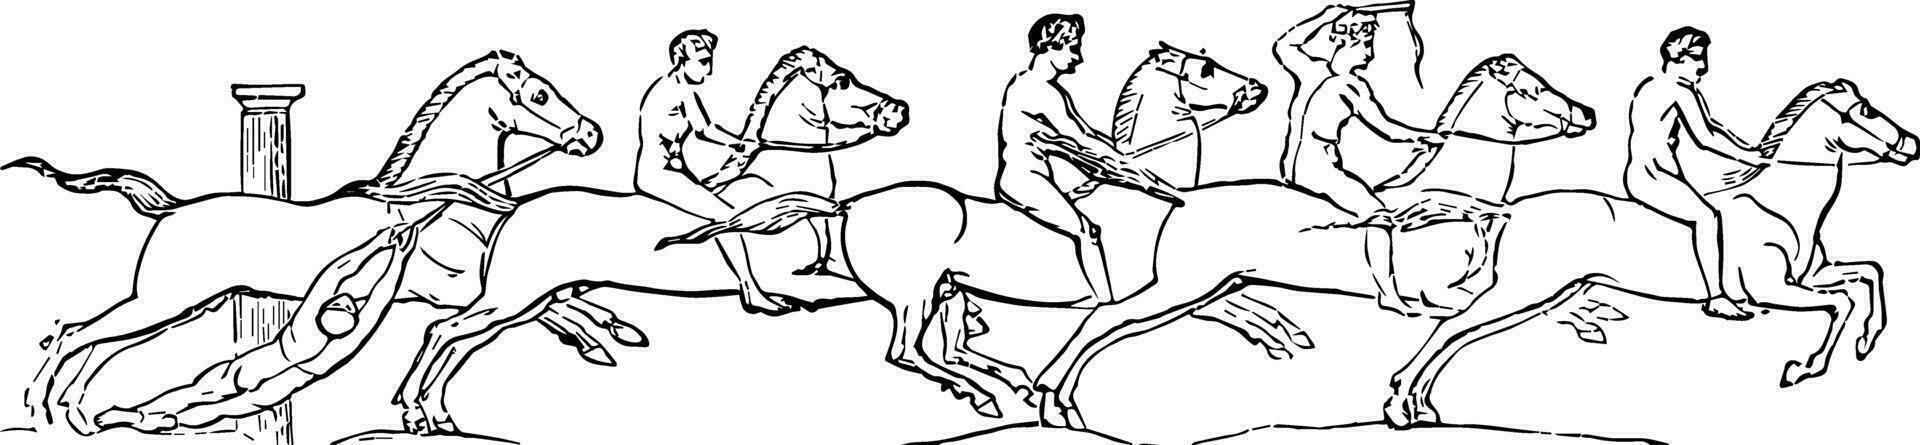 carrera de caballos, Clásico ilustración. vector